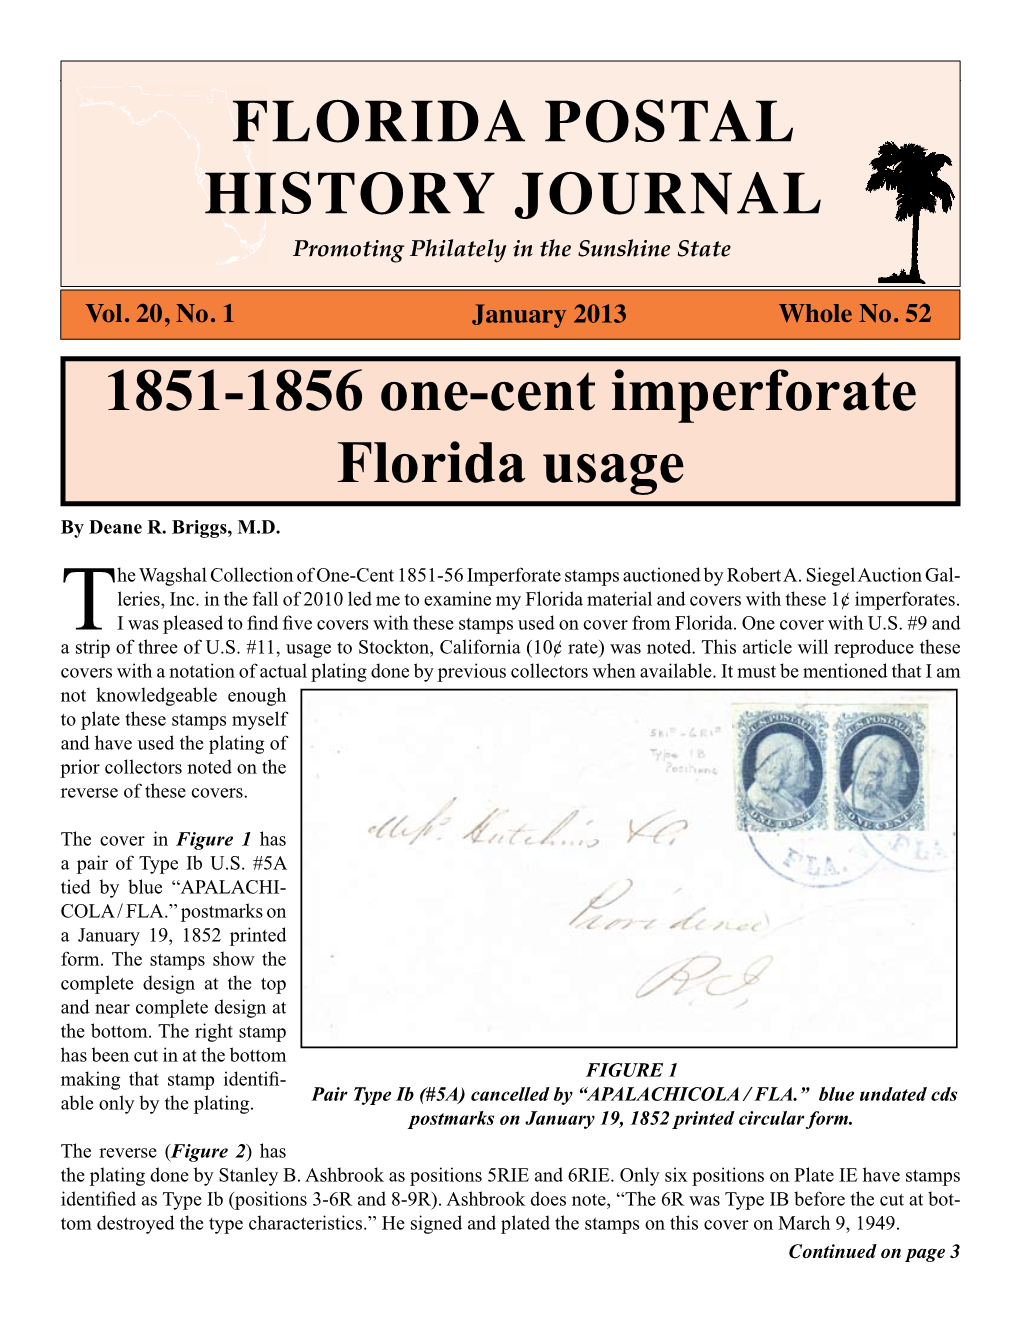 FLORIDA POSTAL HISTORY JOURNAL 1851-1856 One-Cent